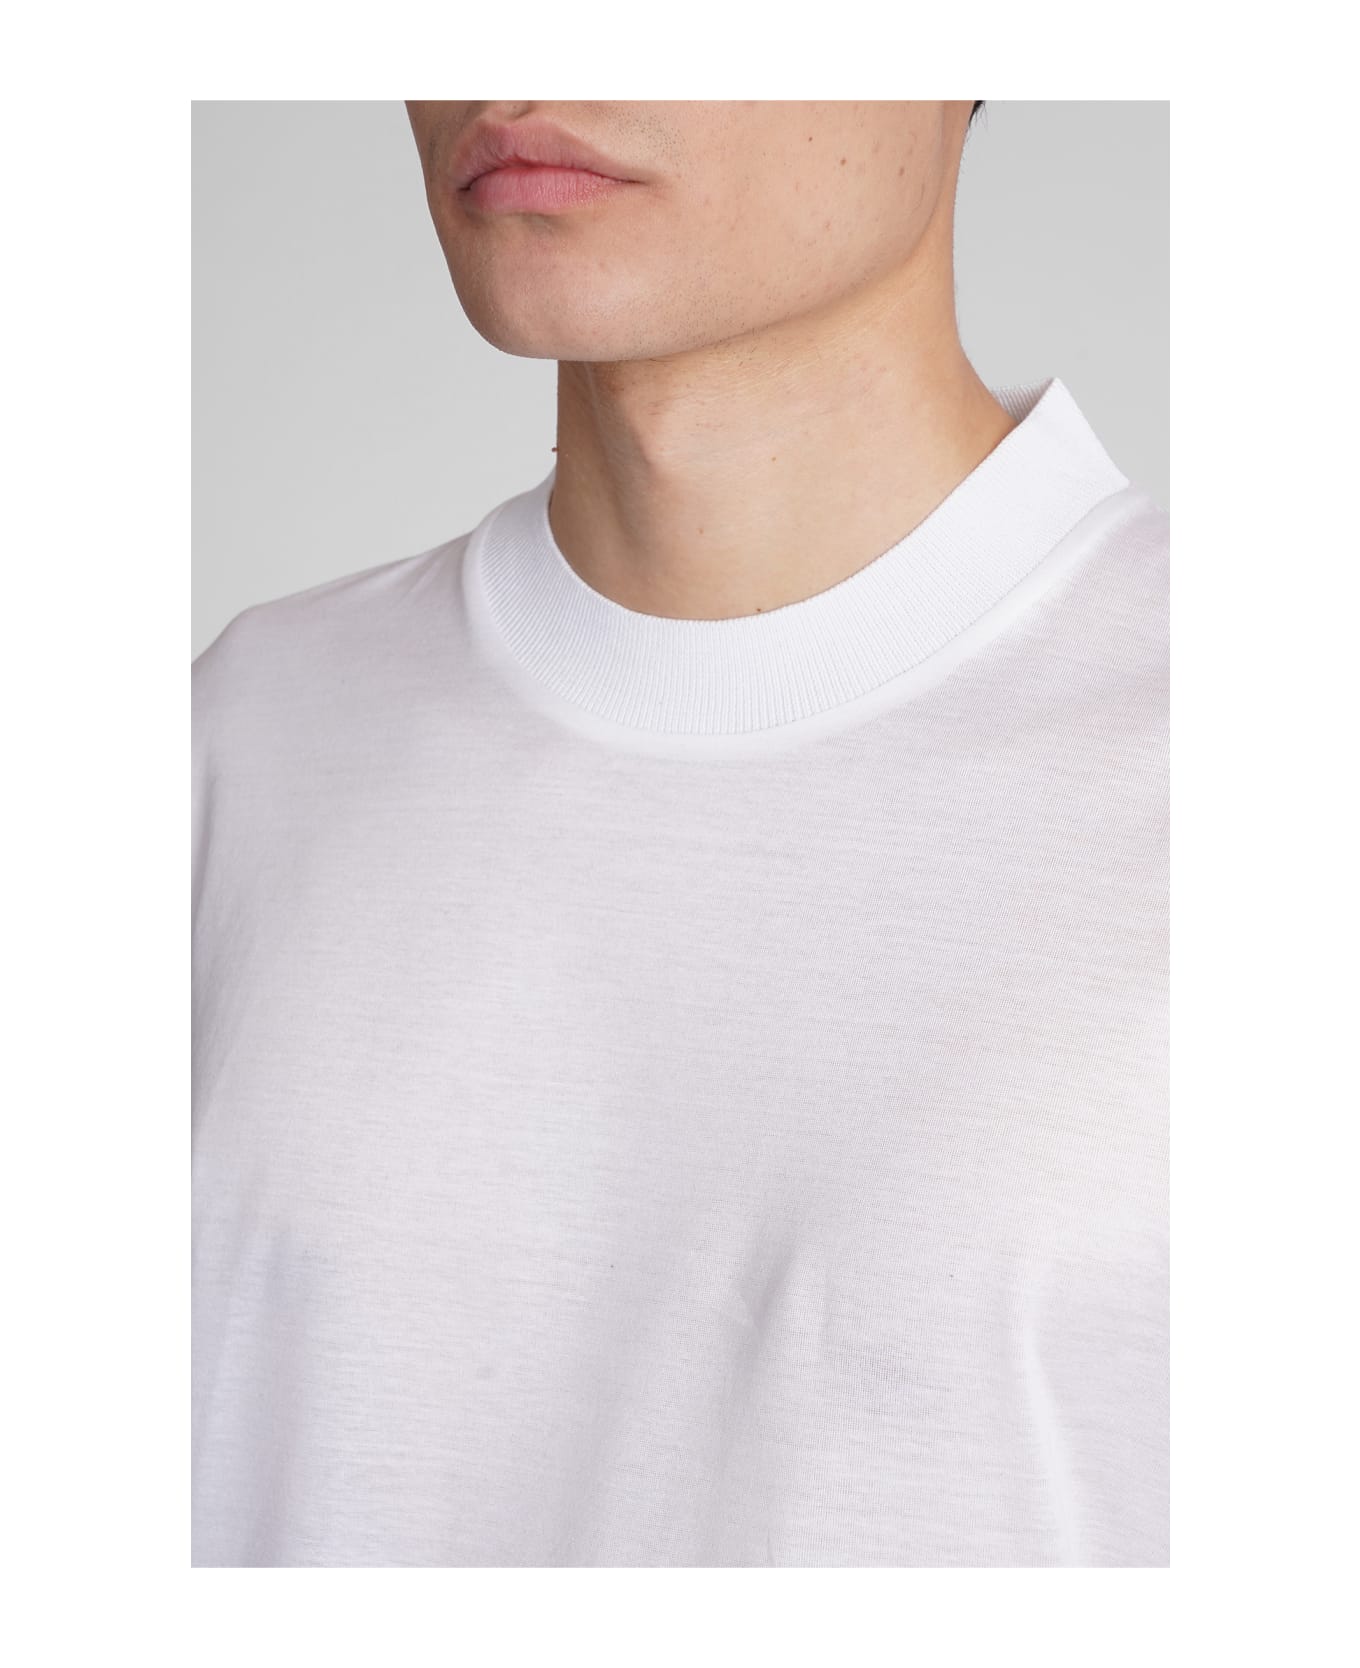 Tagliatore 0205 Keys T-shirt In White Cotton - white シャツ